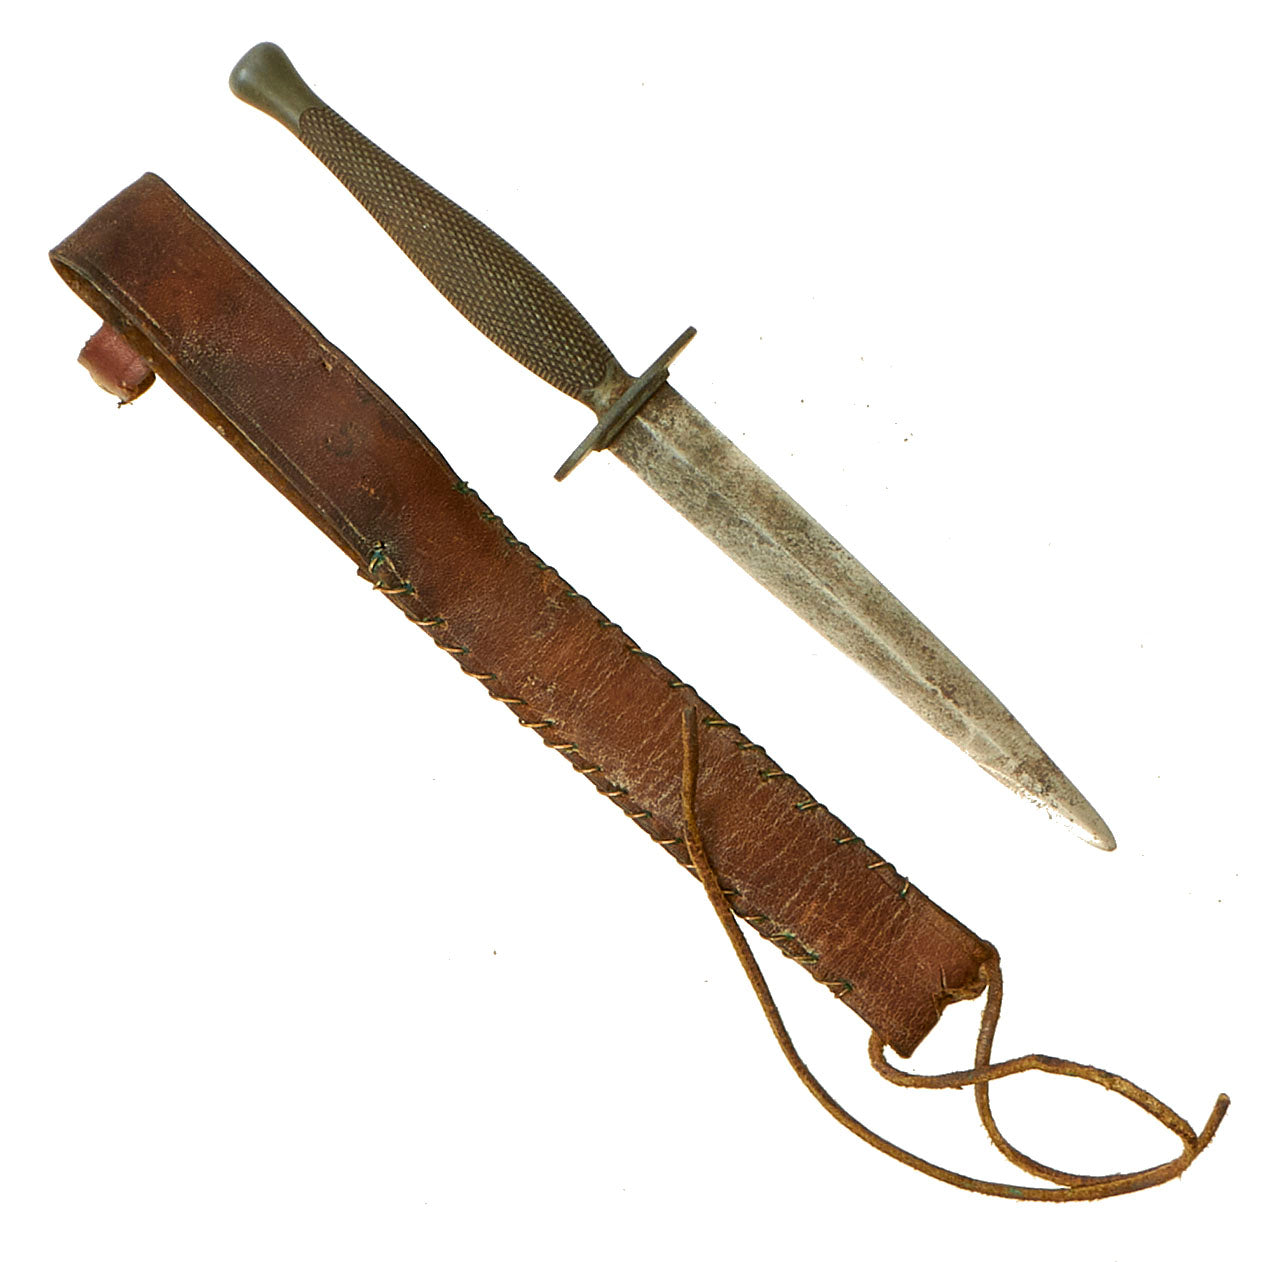 Sold at Auction: WW2 RAIDER STILETTO FIGHTING KNIFE COMMANDO DAGGER